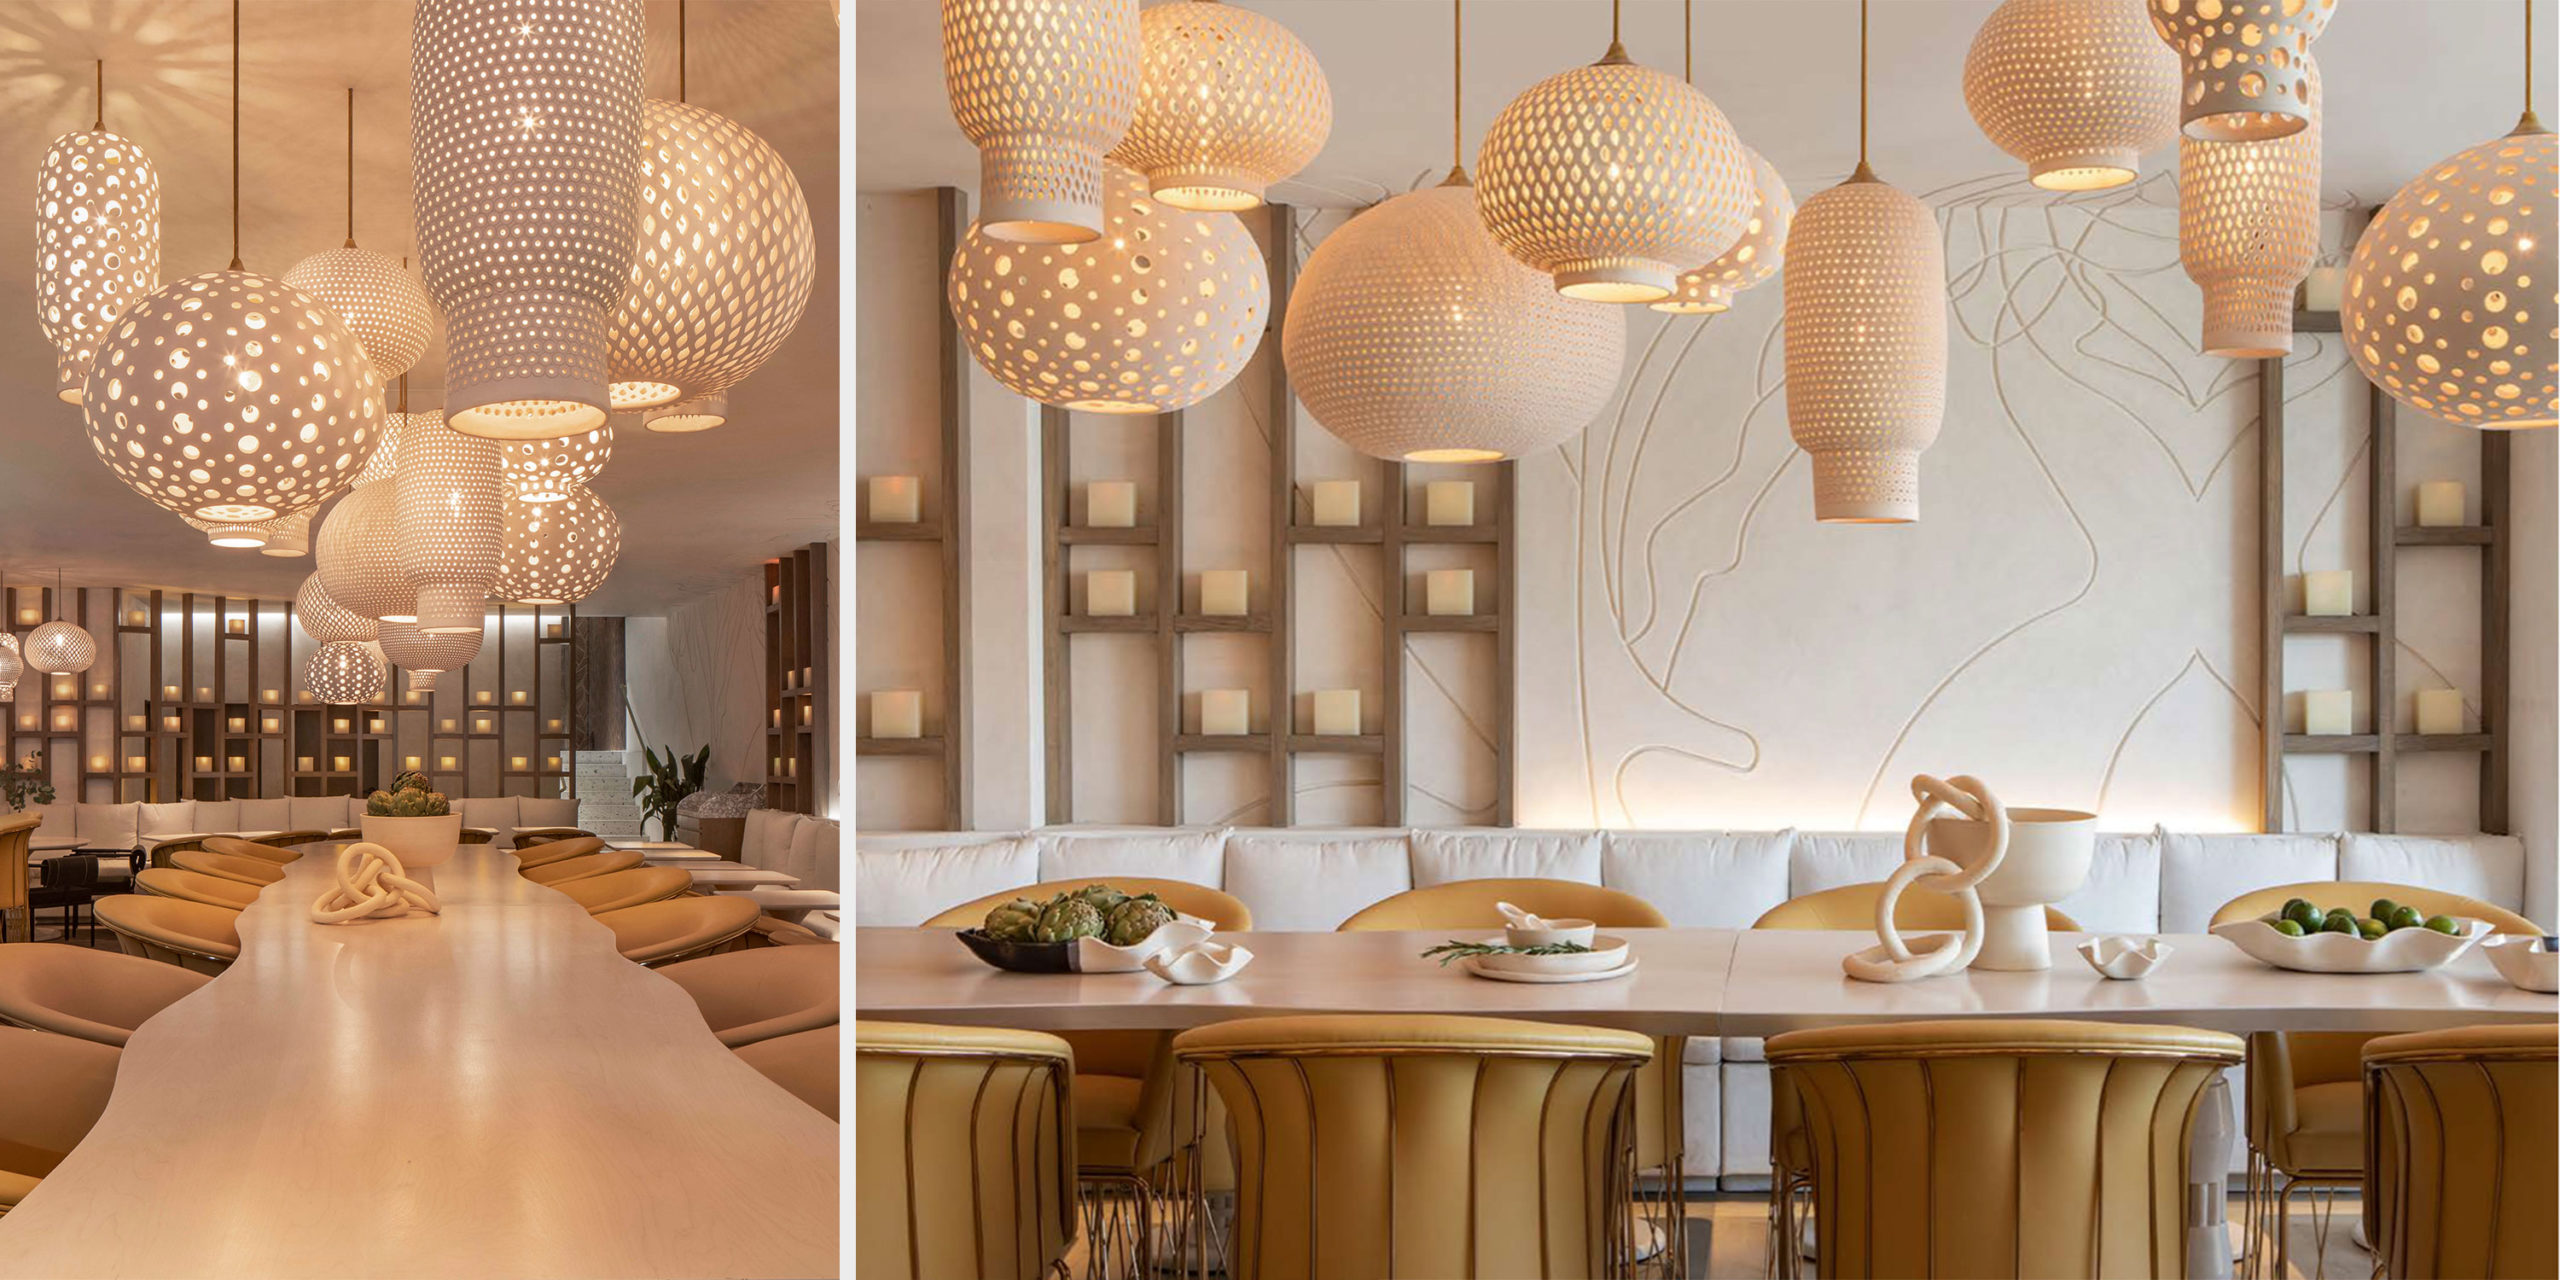 Pendant lights by L'Aviva Home for Gulla Jonsdottir Design at Esperanza Restaurant